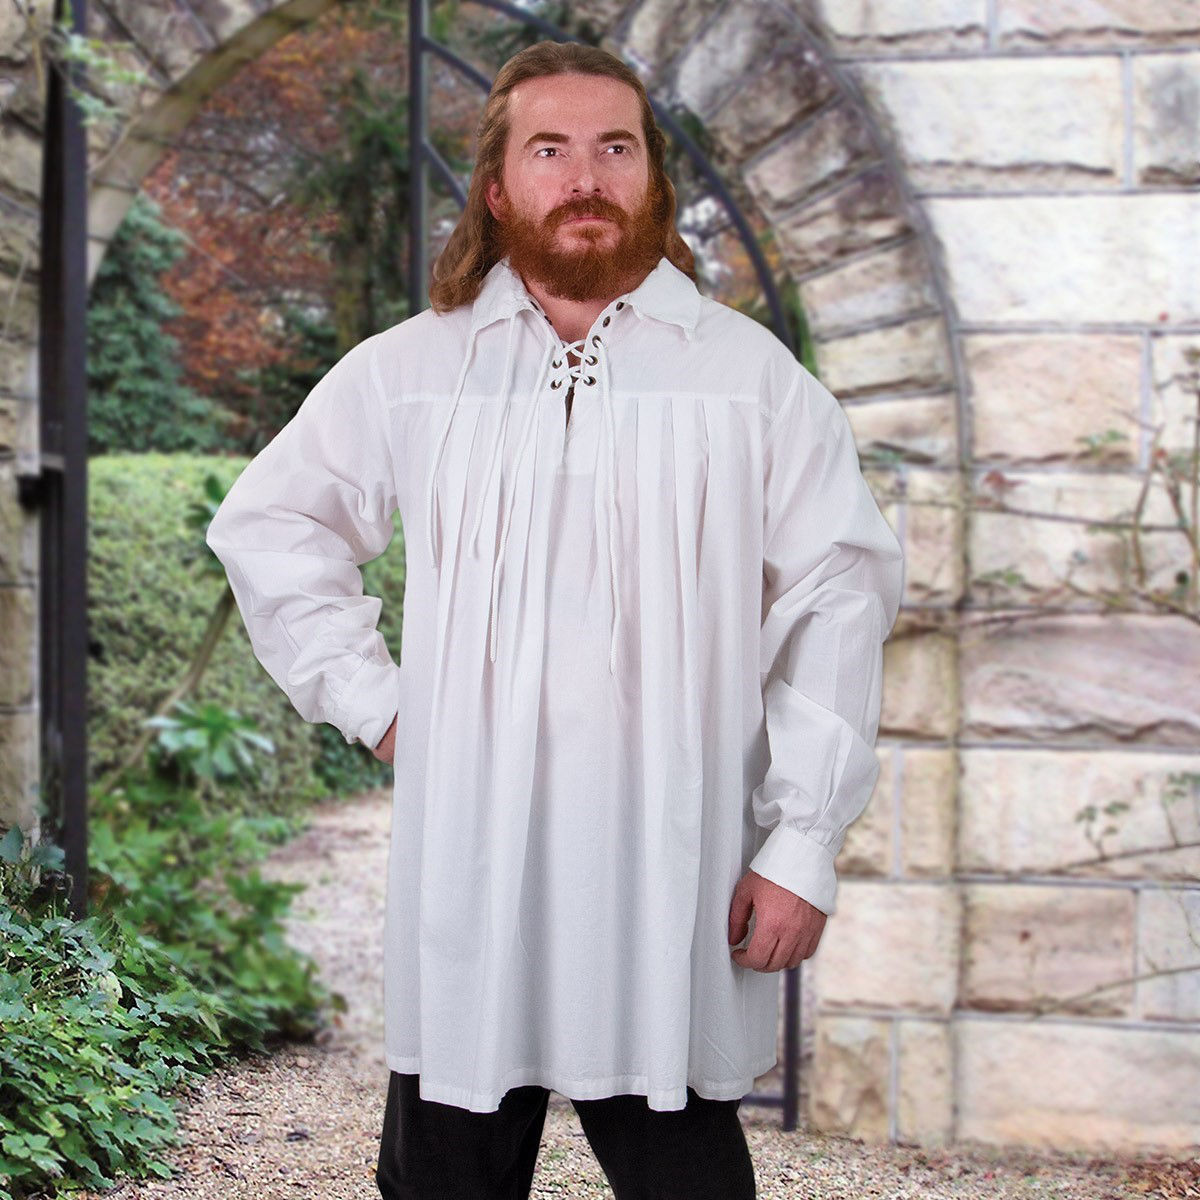 White Men's Elizabethan Renaissance swordsman shirt has a fitted, narrow cuff with lace closure, 100% cotton